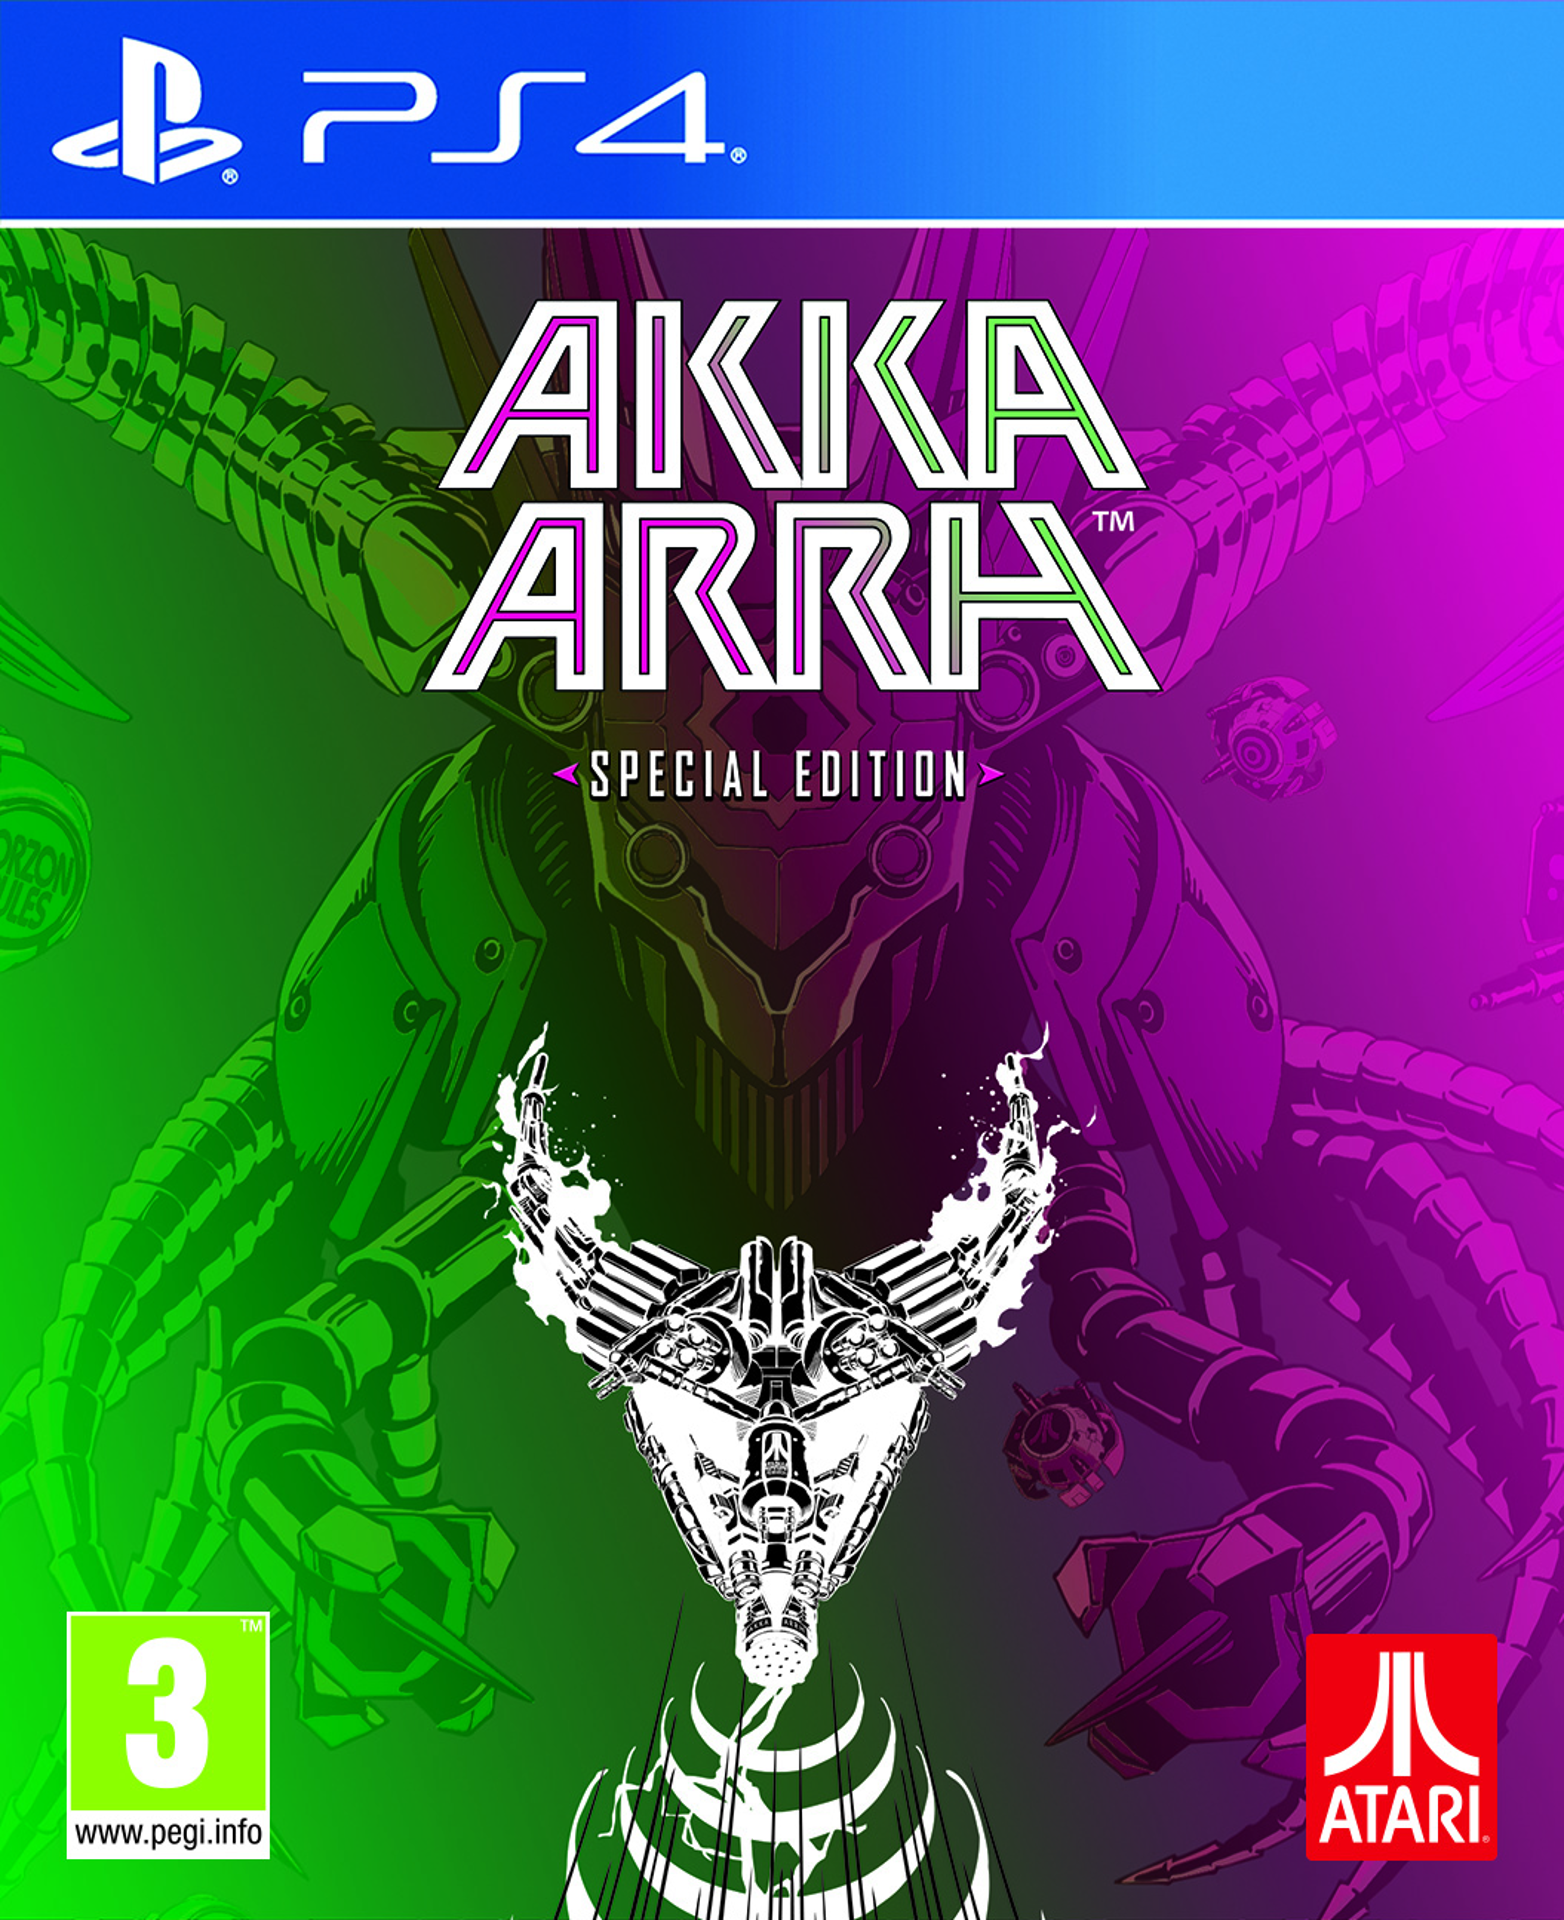 Akka Arrh - Special Edition